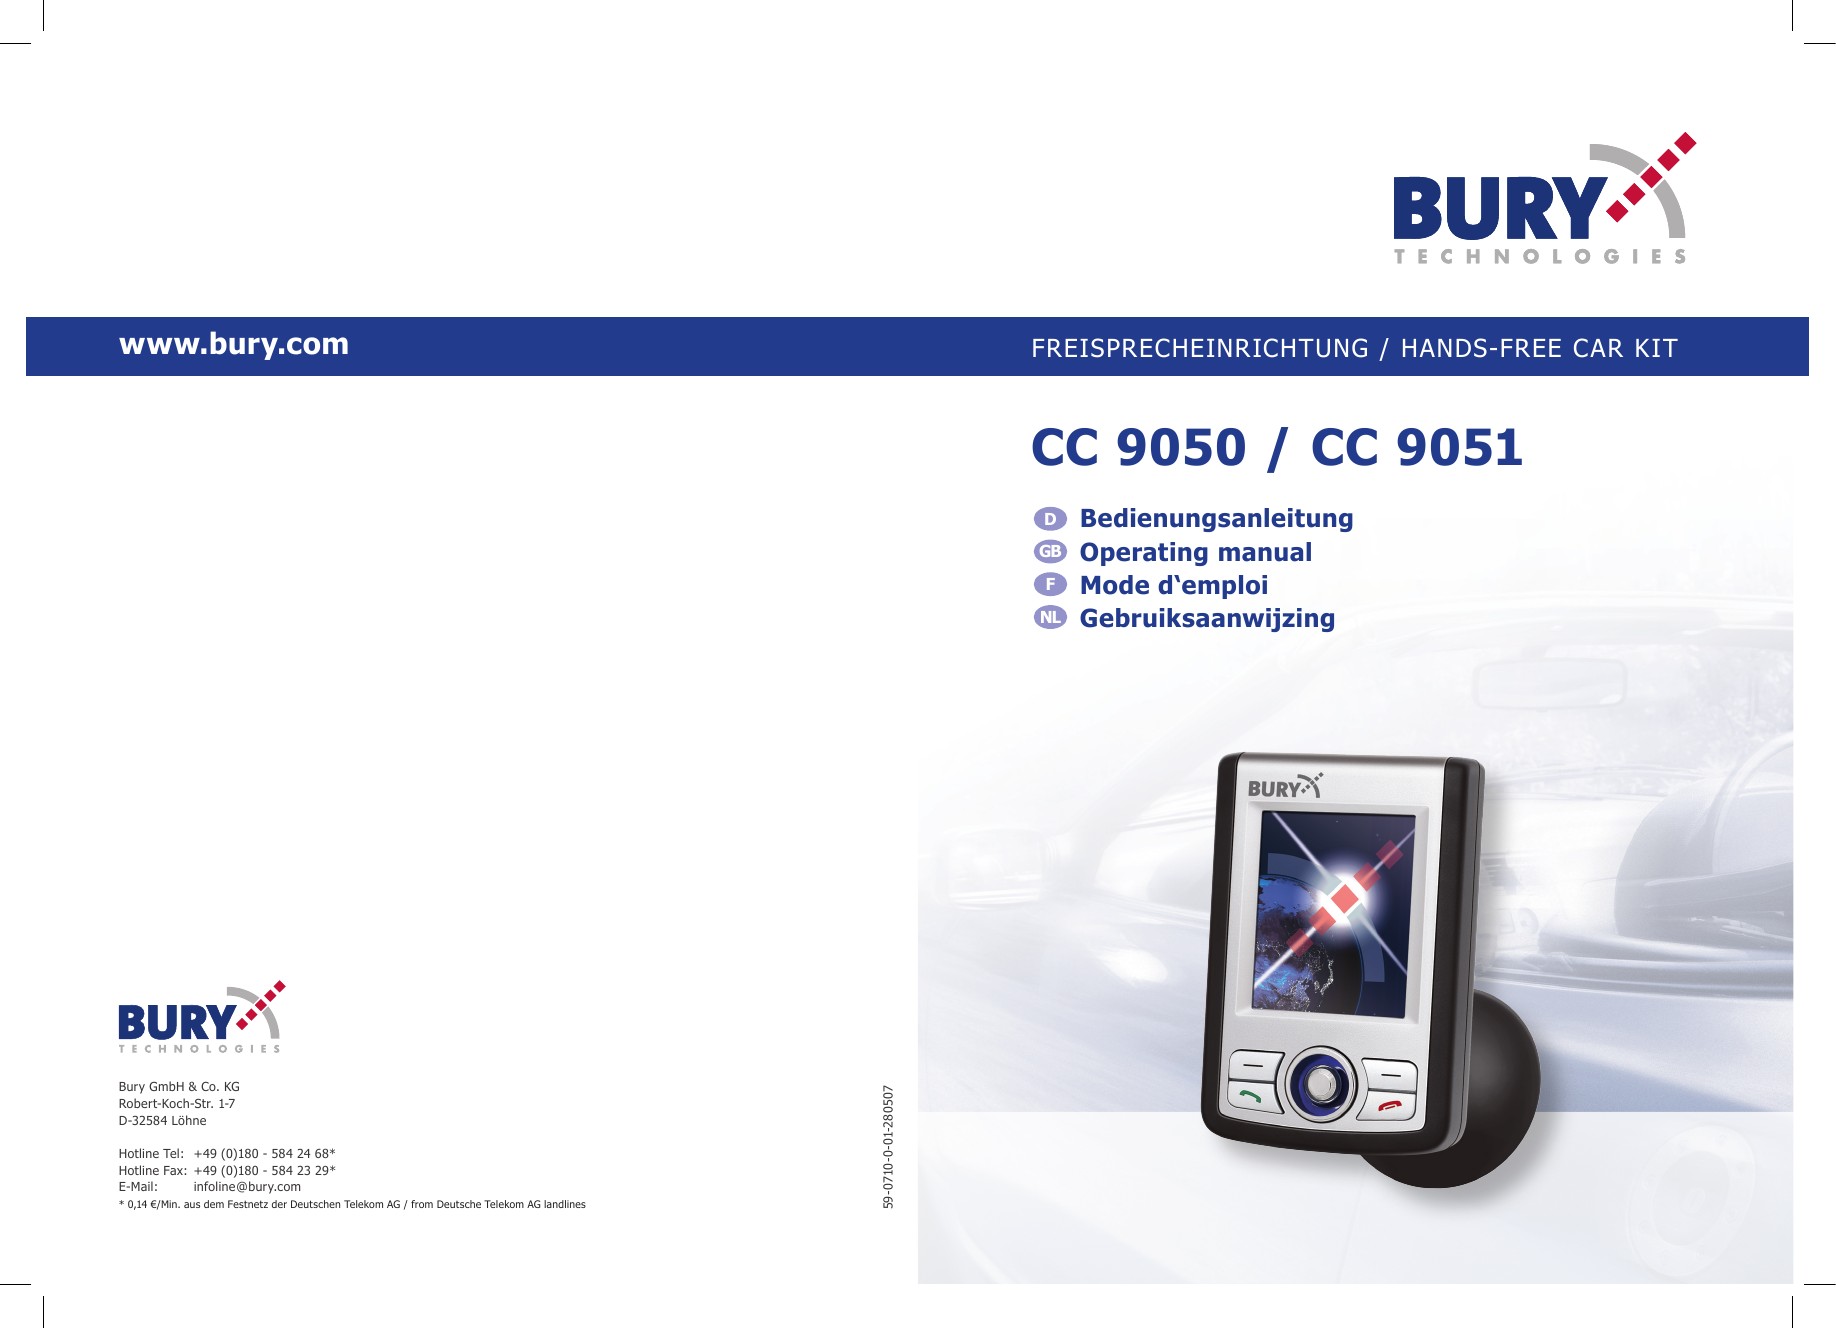 Bury Car Kit Wiring Diagram Cc9040 51 Bluetooth Handsfree Carkit User Manual Bury Gmbh & Co Kg Of Bury Car Kit Wiring Diagram